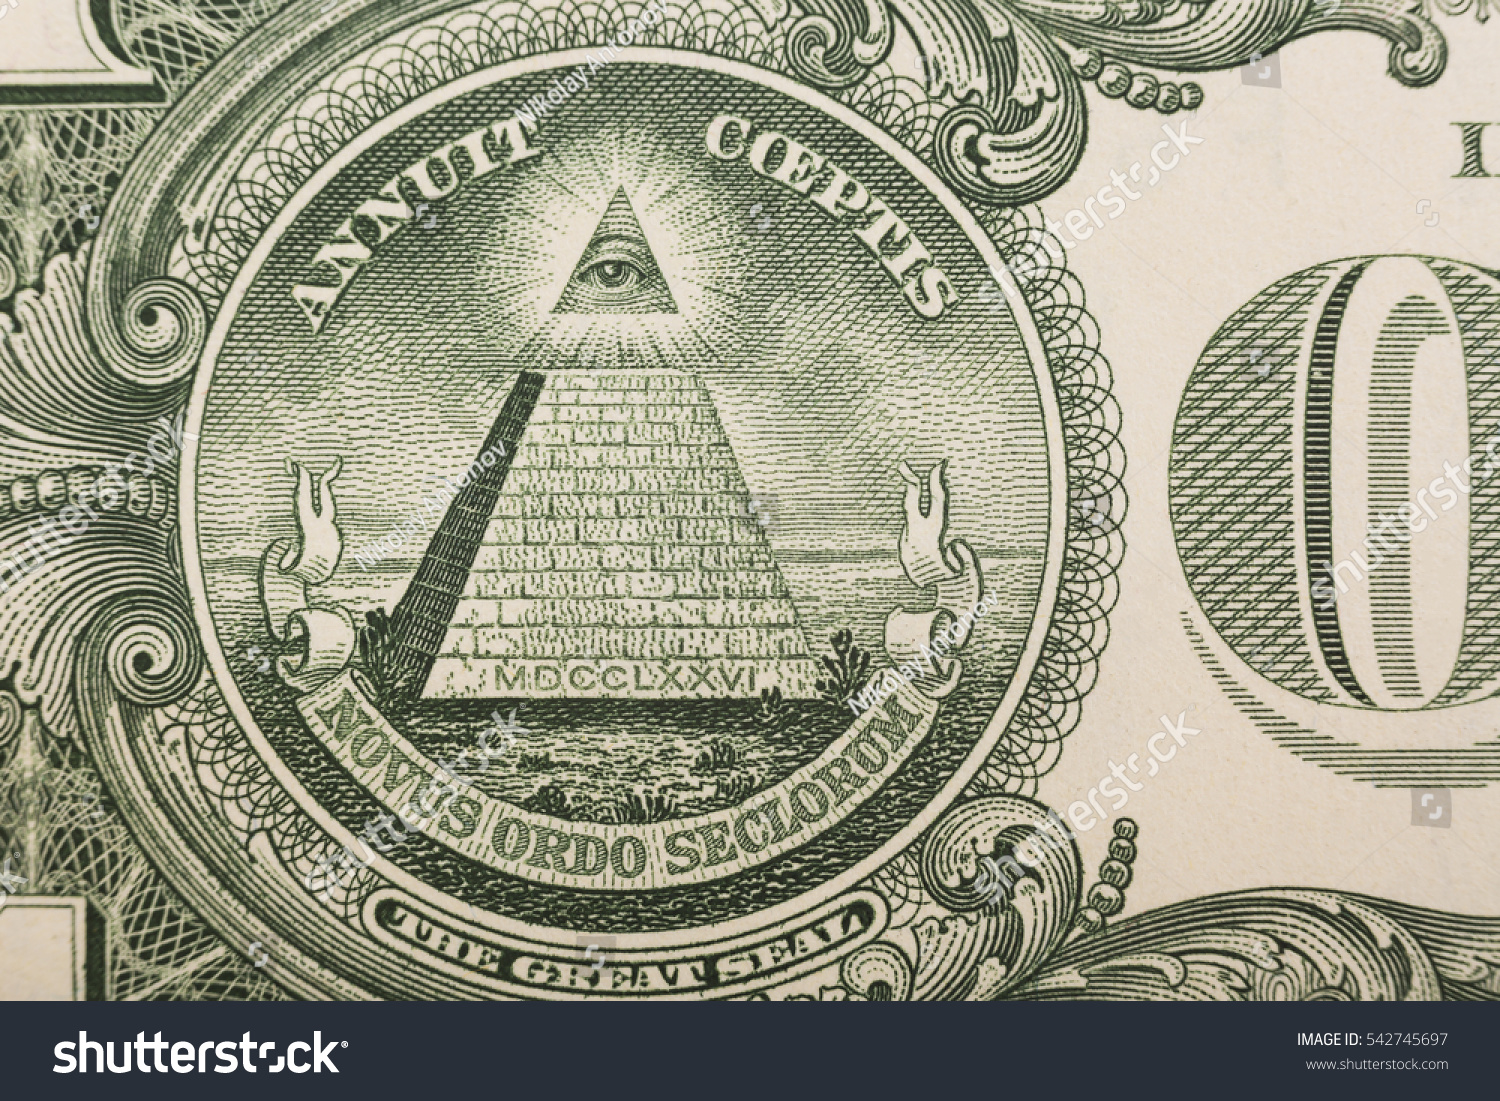 1,783 Pyramid on dollar bill Images, Stock Photos & Vectors | Shutterstock